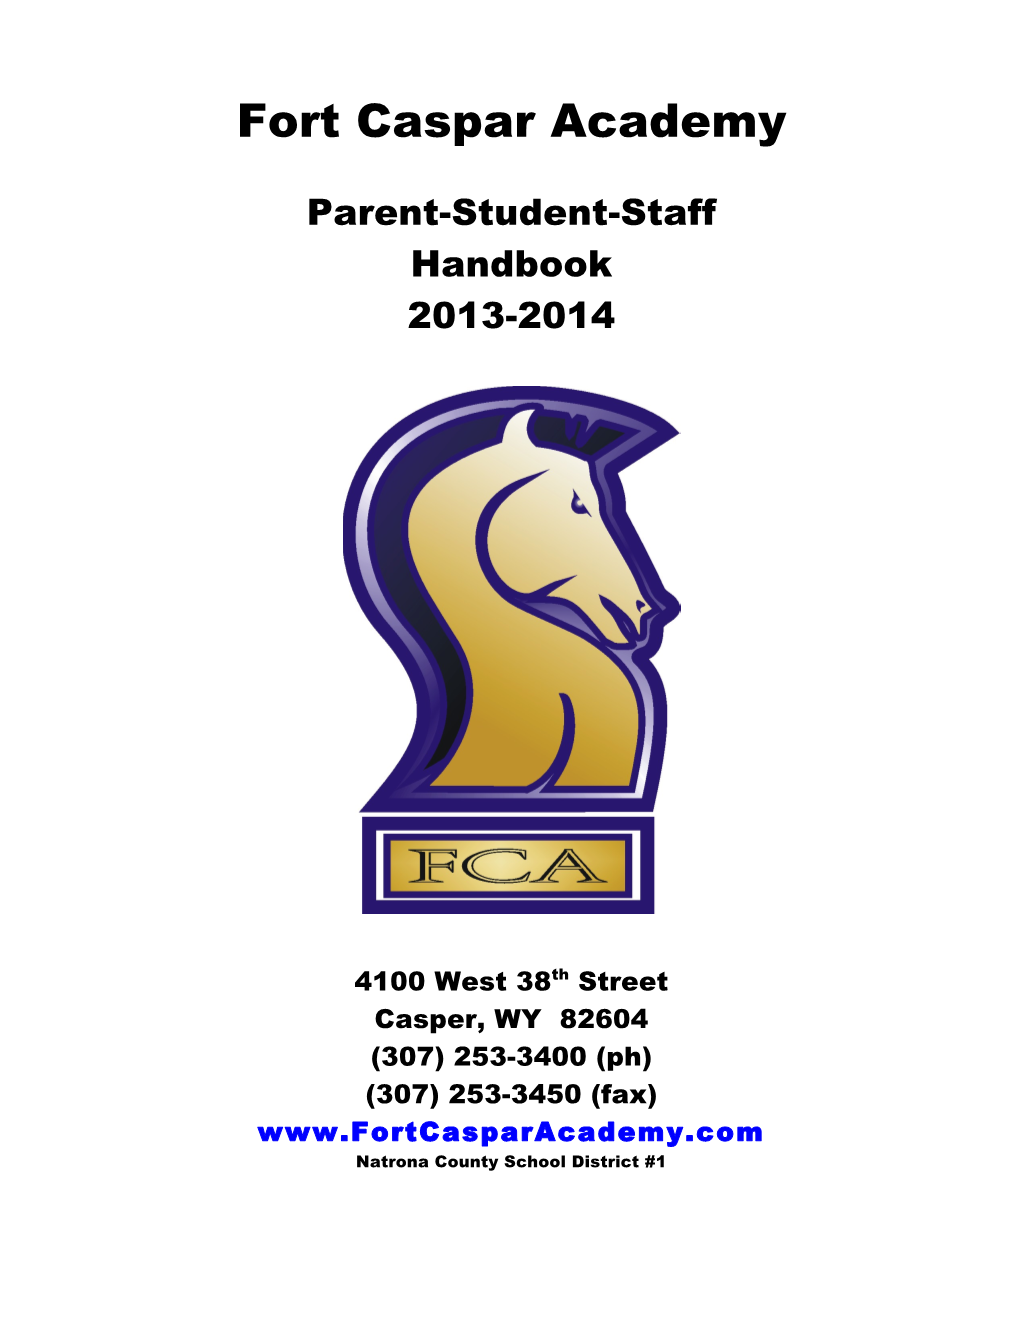 Parent-Student-Staff Handbook 2013-2014